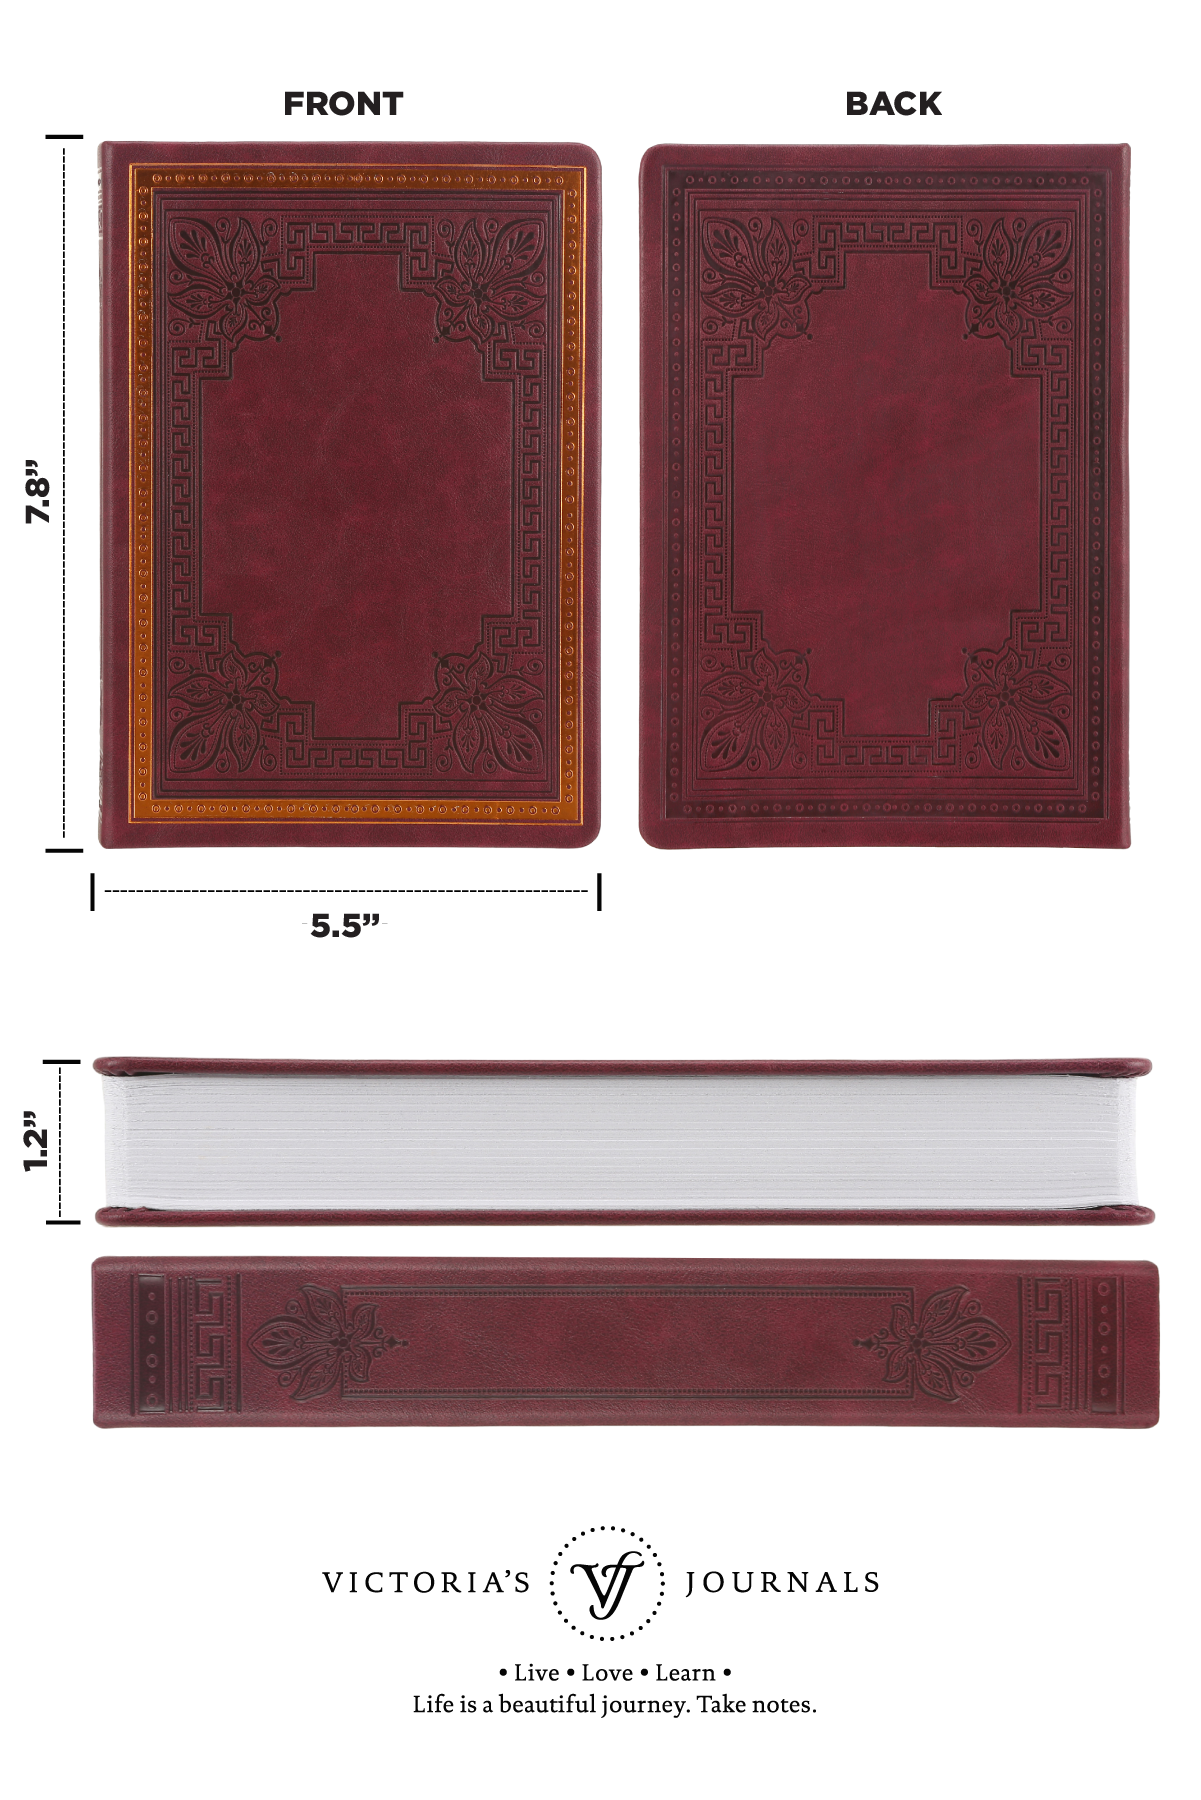 Sketchbook Antique Style Victoria's Journals (Burgundy)